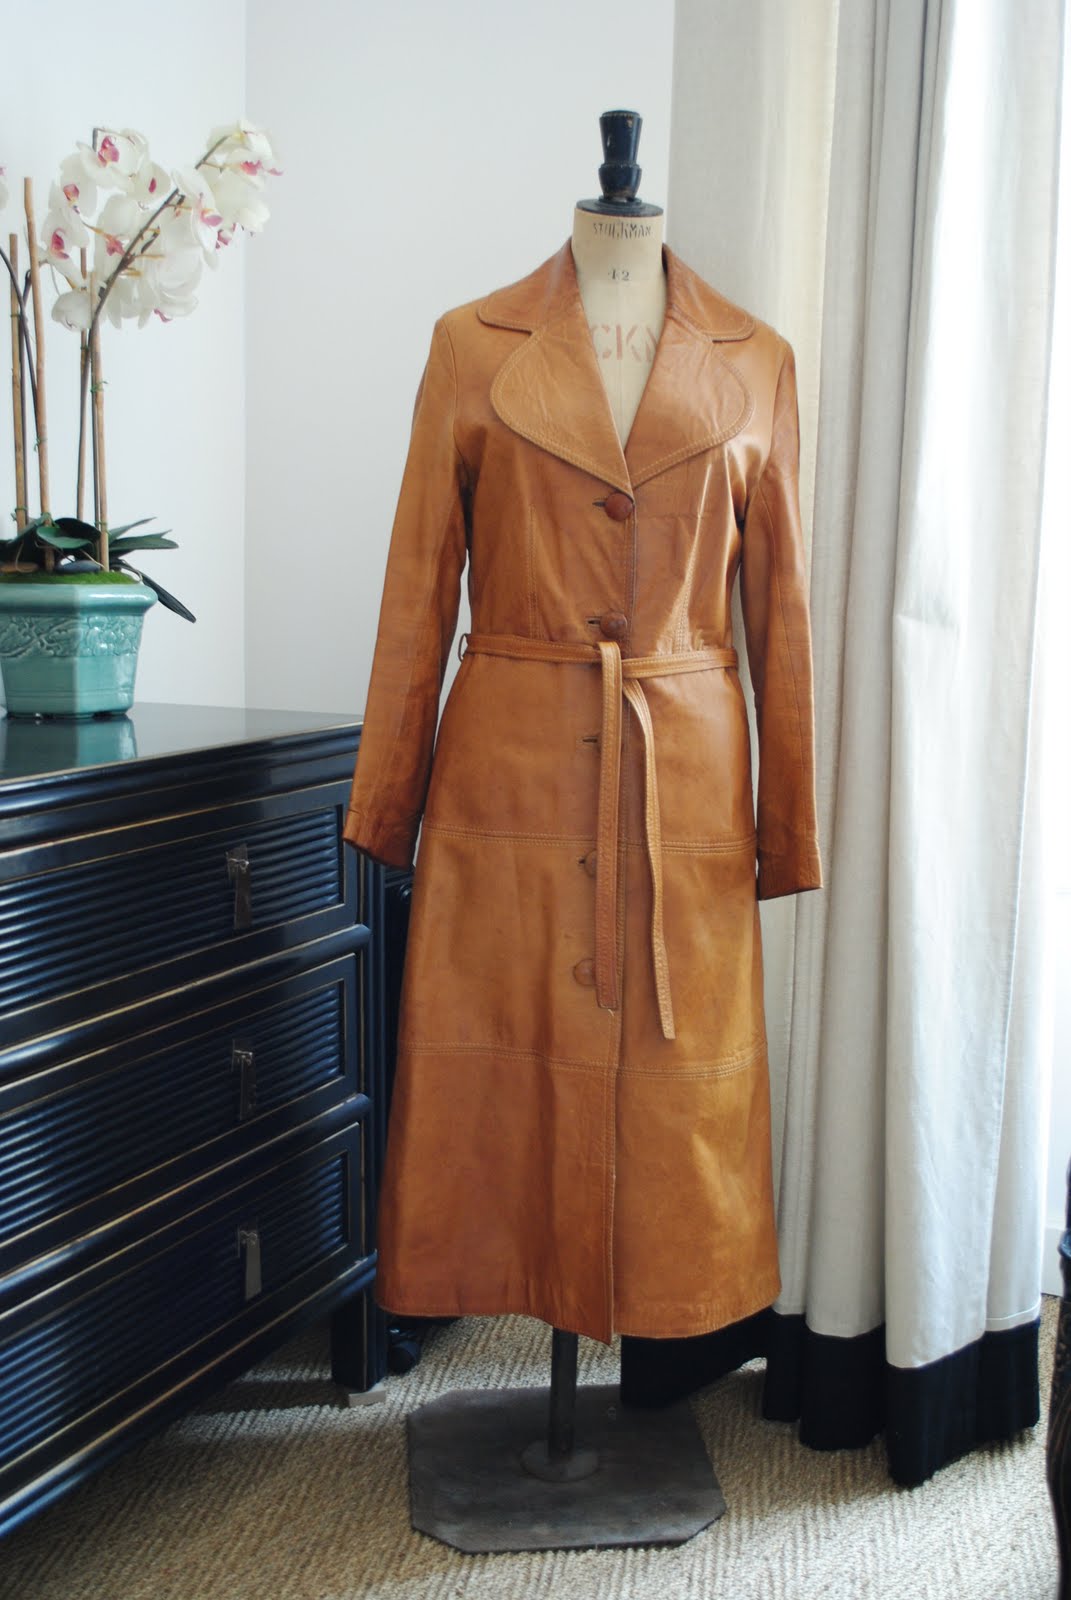 Fabulous vintage leather coat for sale